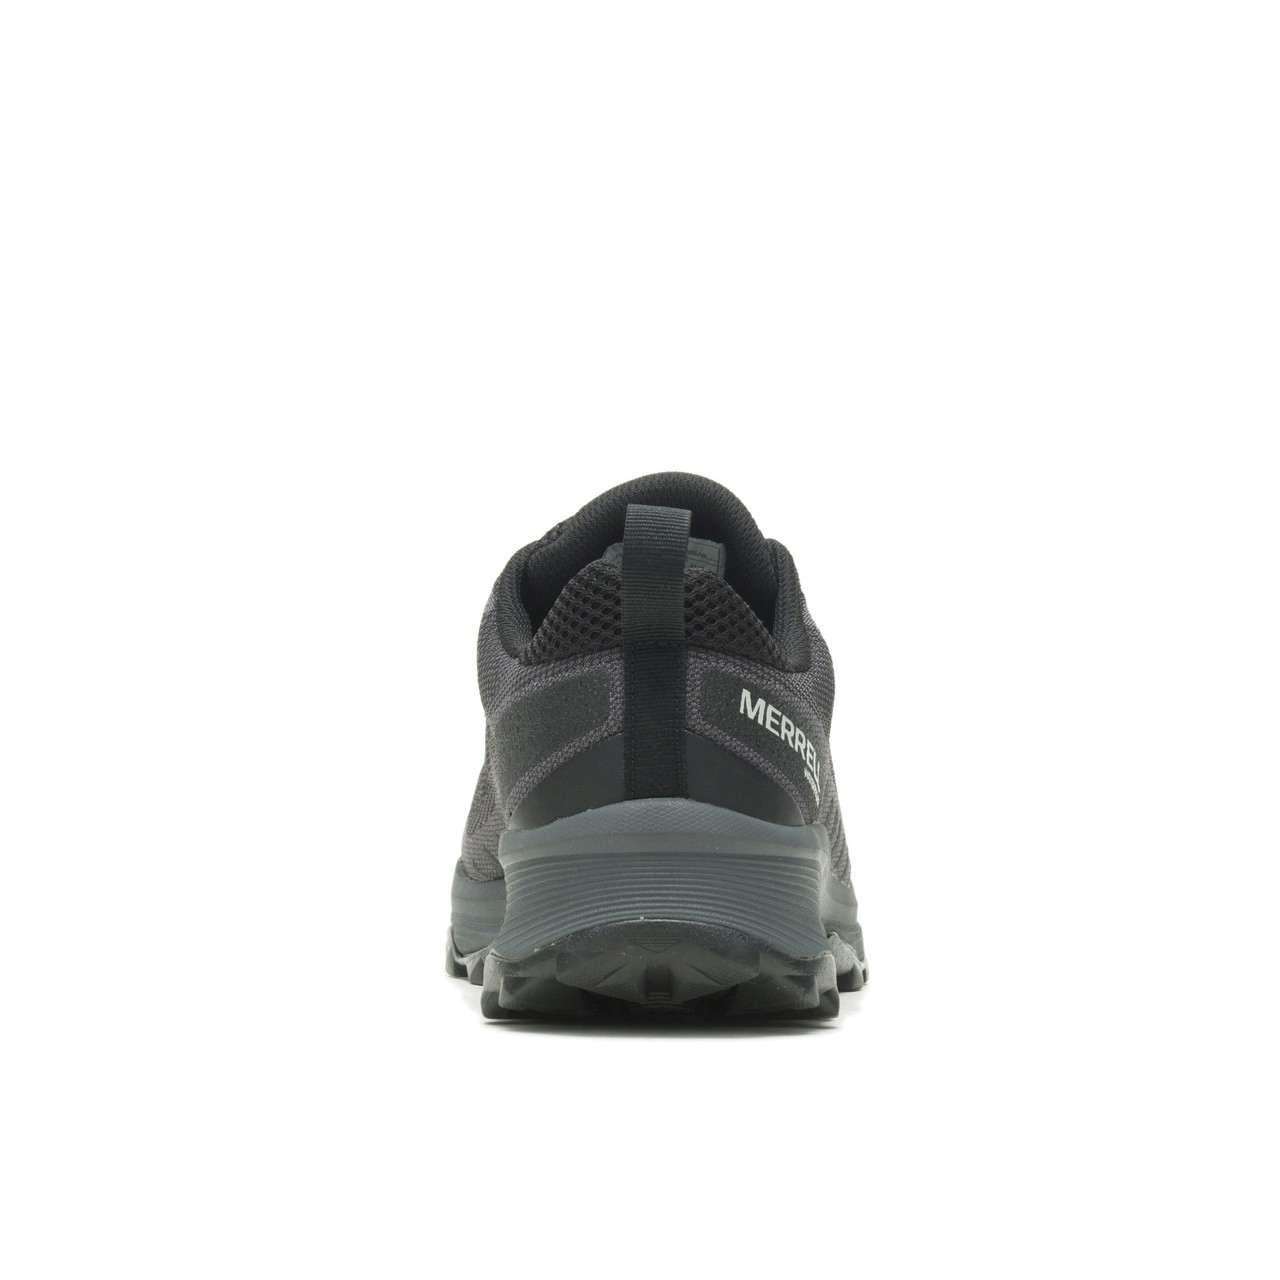 Speed Eco Waterproof Light Trail Shoes Black/Asphalt